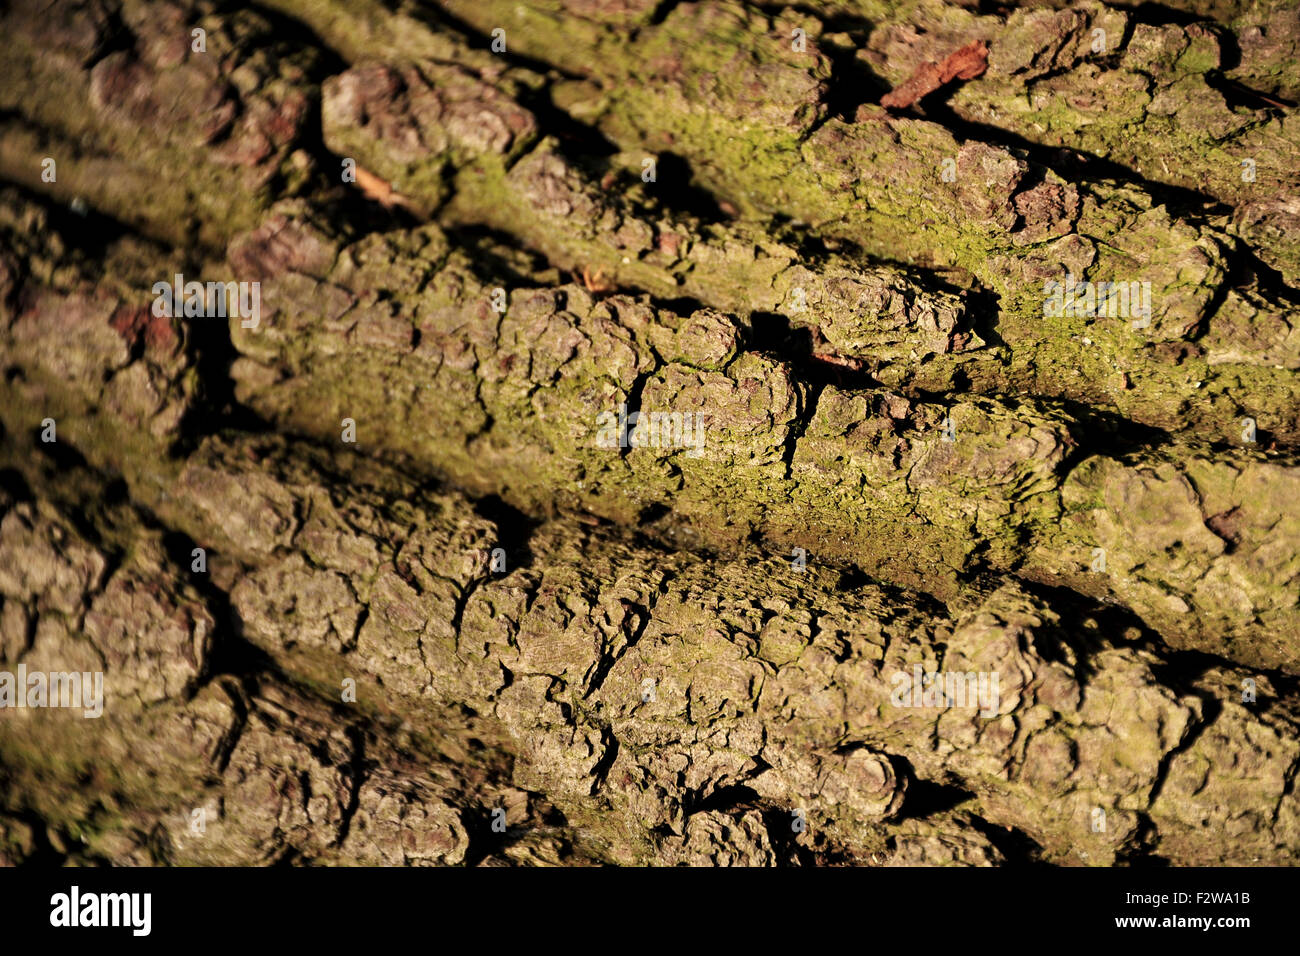 09.05.2015, Sandkrug, Lower Saxony, Germany - Bark of a tree. 0HD150509D047CAROEX.JPG - NOT for SALE in G E R M A N Y, A U S T Stock Photo